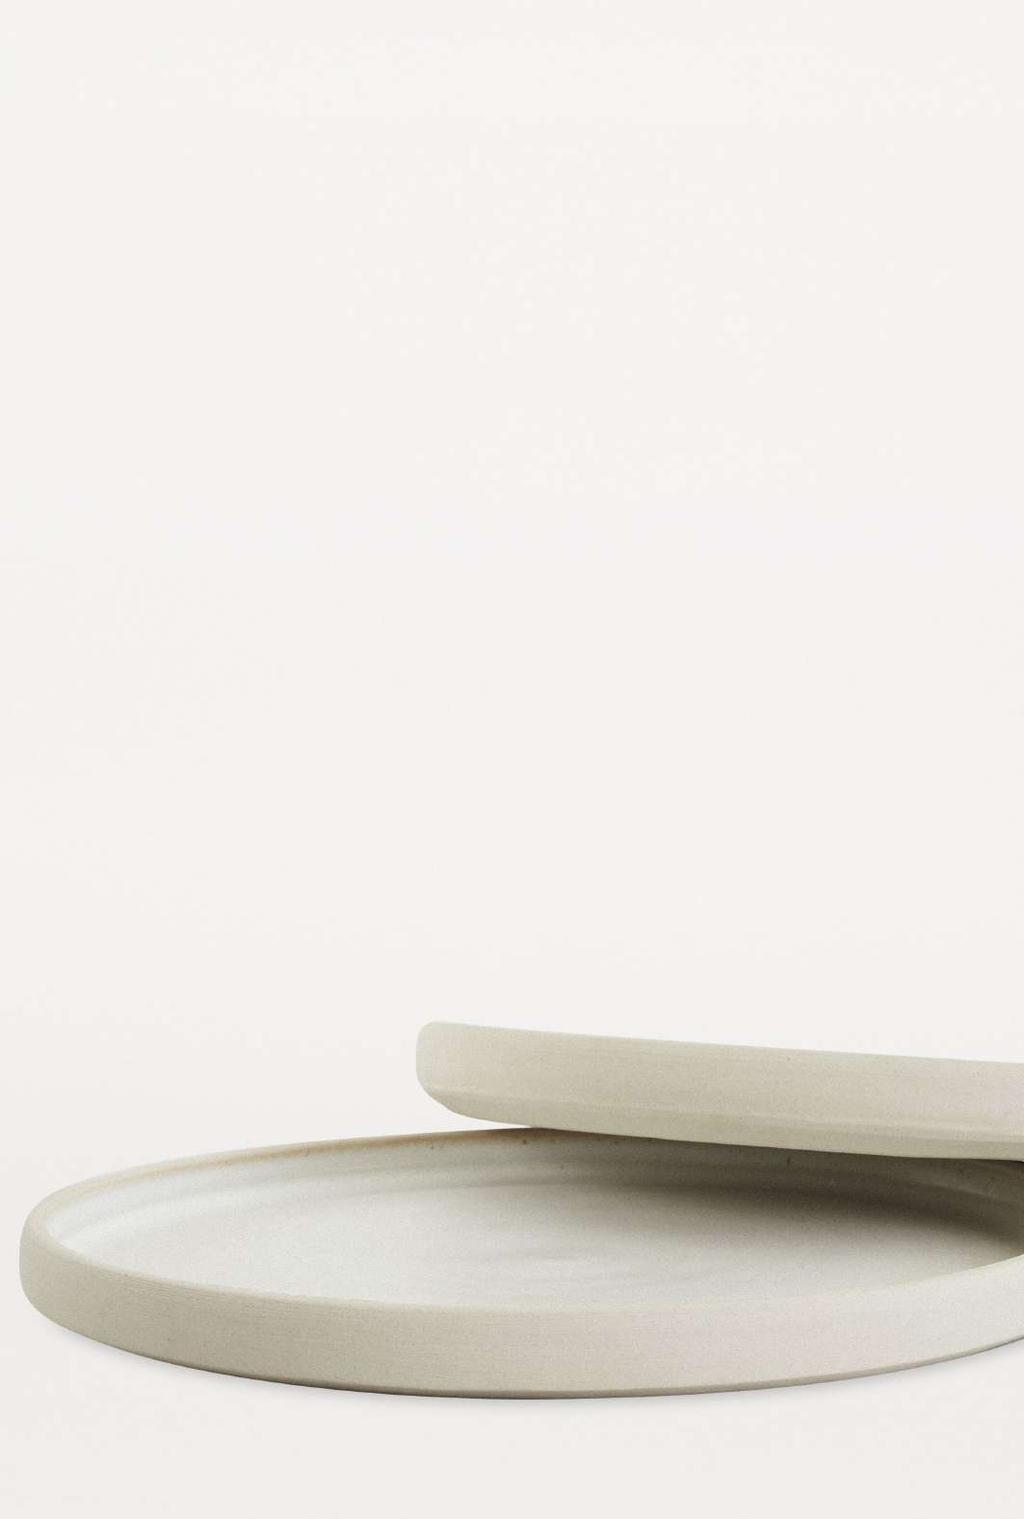 Ø110 Ø95 Ø190 20 Ø250 25 Ø95 45 Ø125 60 Ø70 80 Ø70 80 115 150 OTTO Design Frama Year 2011 Typology Collection Origin Material Finish Dinnerware Signature Denmark / Portugal Stoneware Matte black